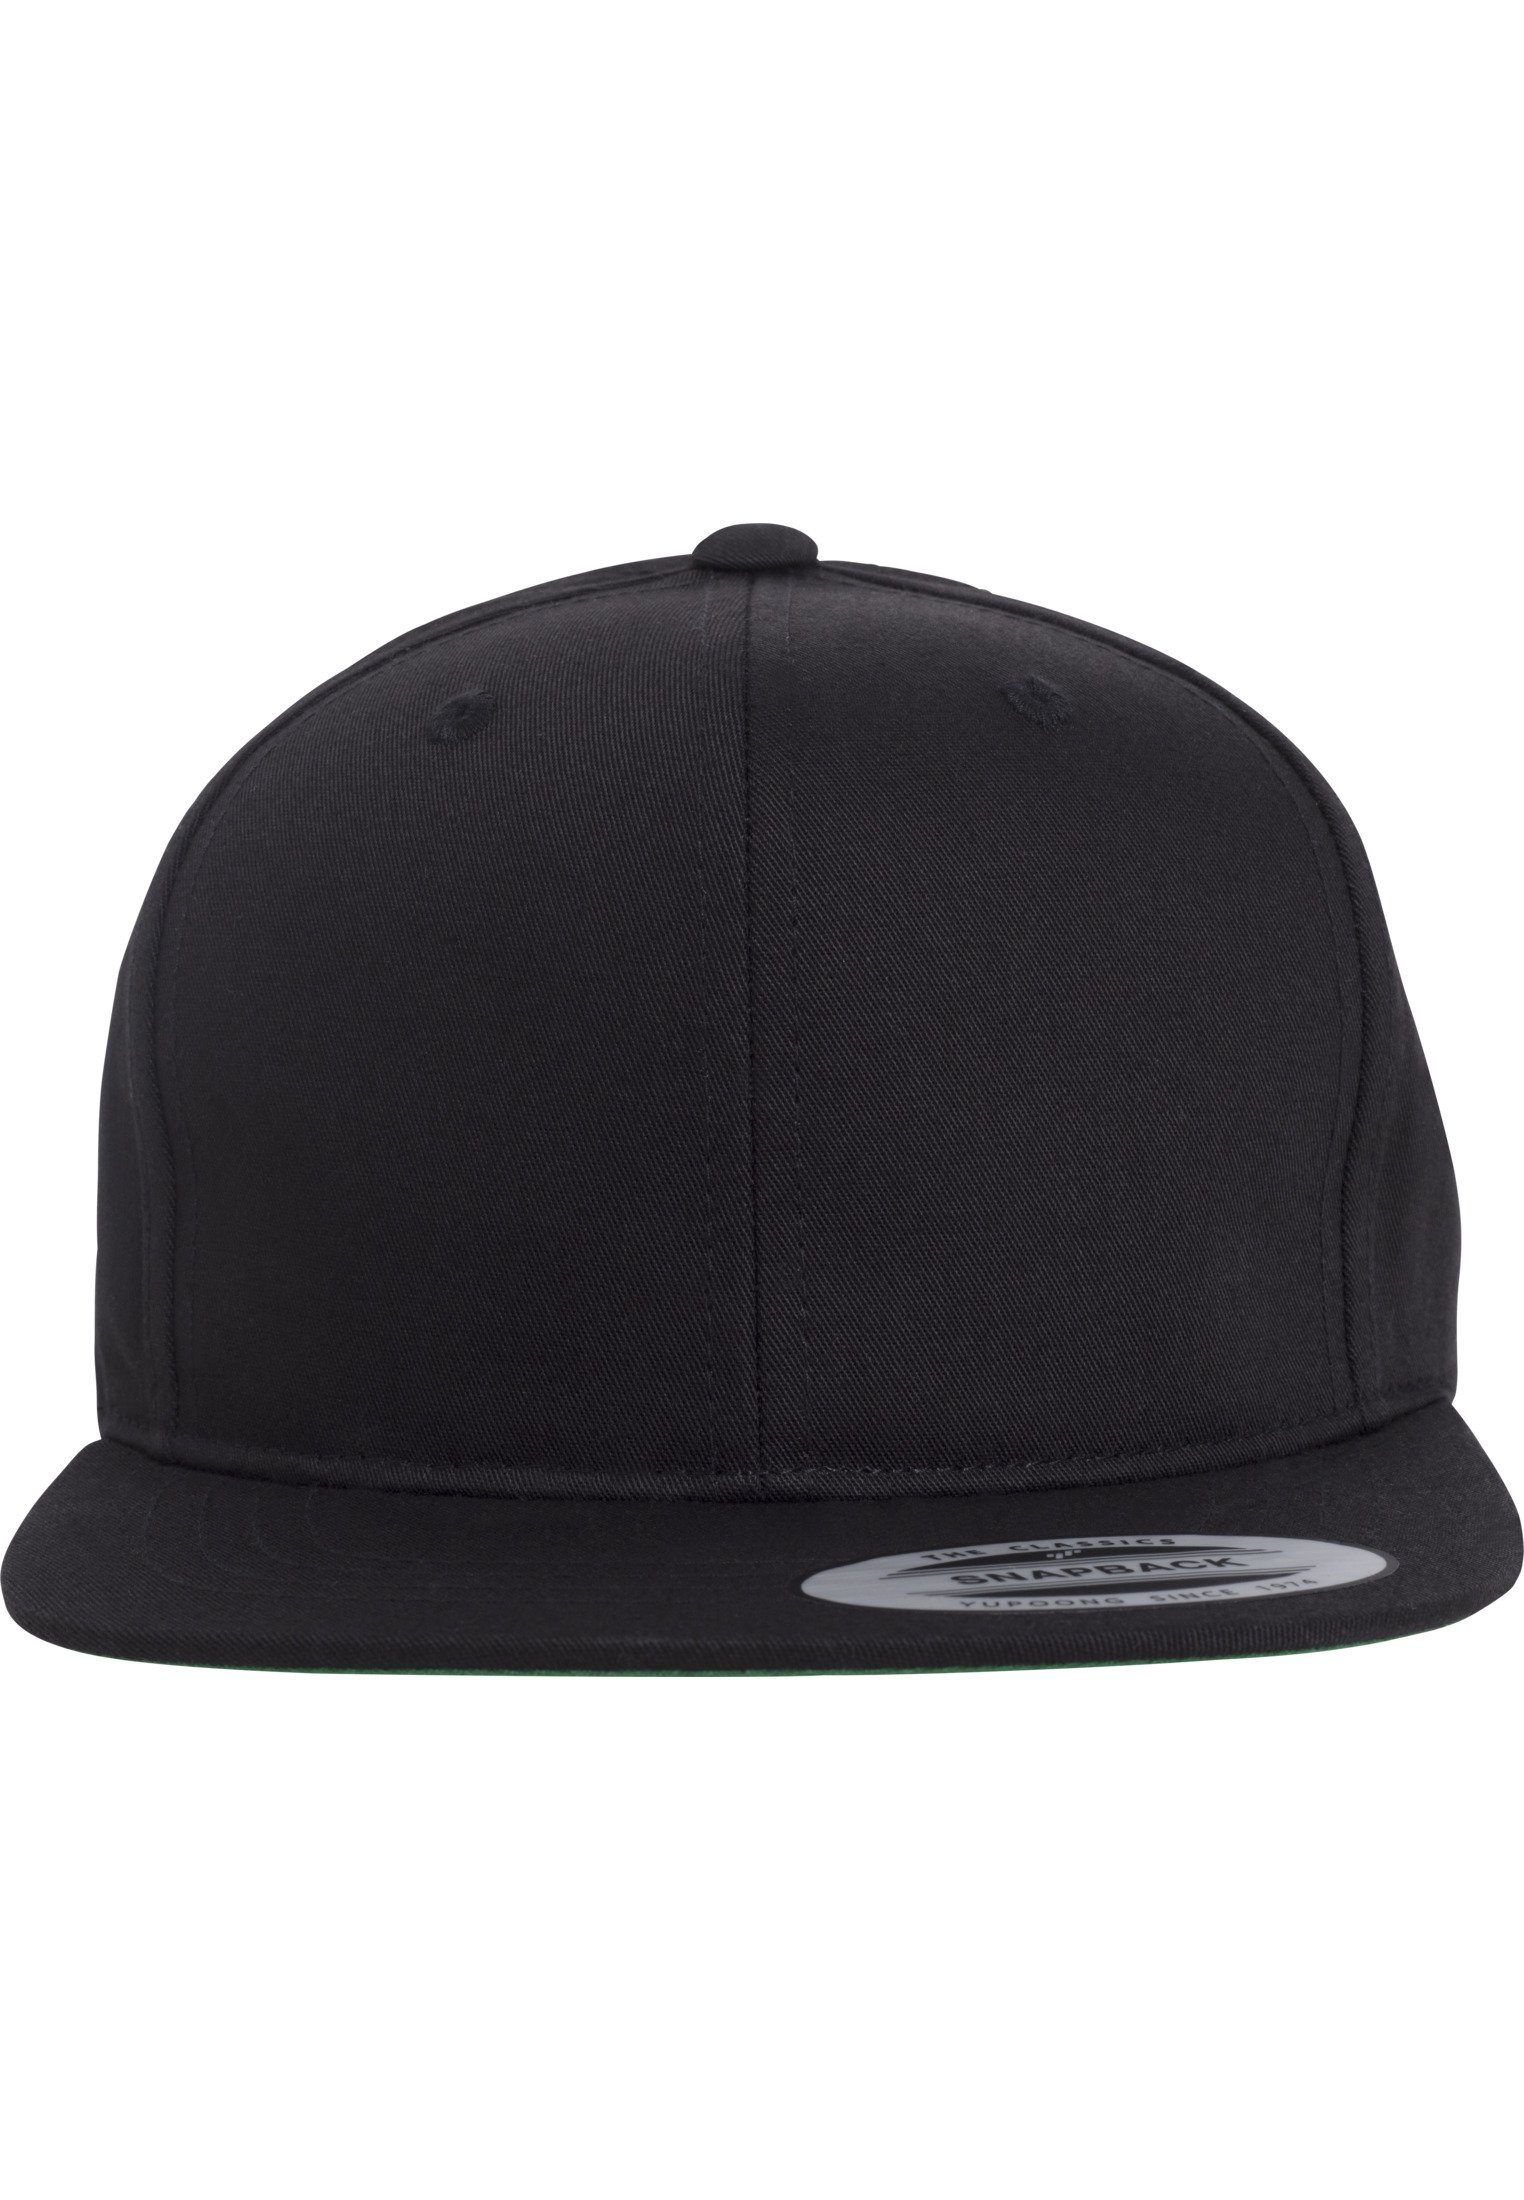 Flexfit Twill Youth Cap Snapback Snapback Flex black Cap Pro-Style